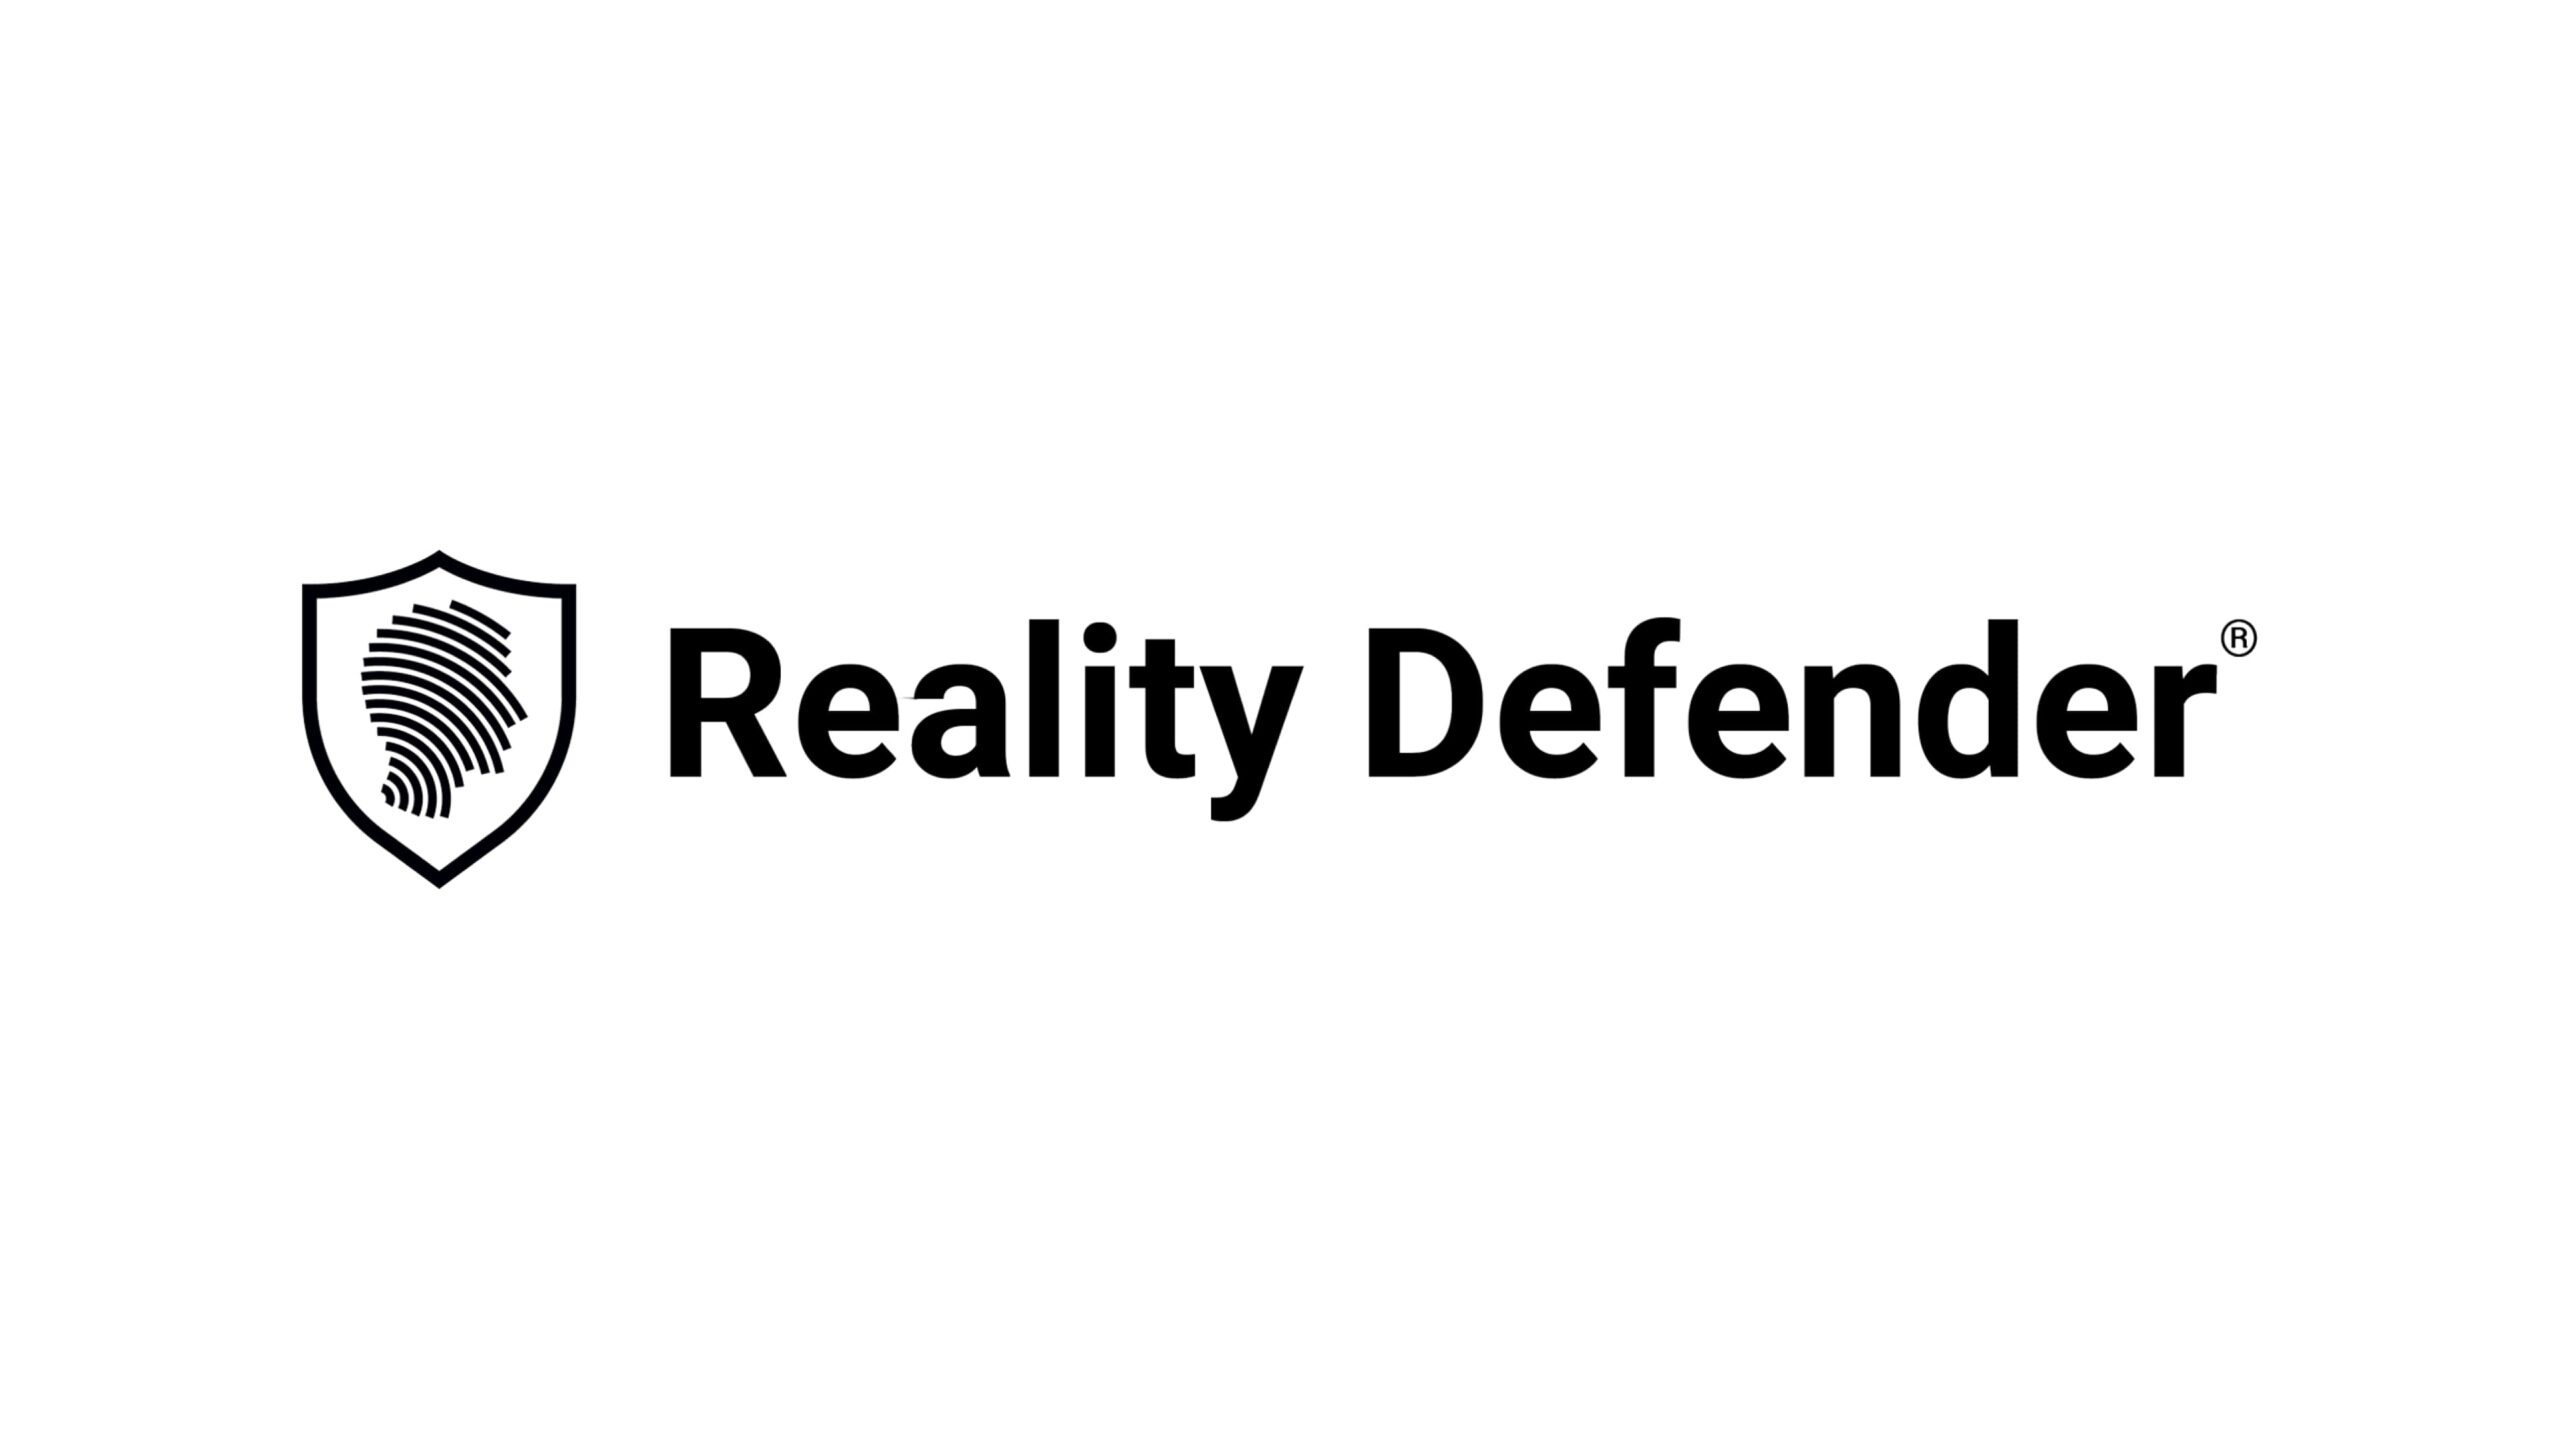 Reality Defender、テキスト、動画、画像のディープフェイクを検出するため1,500万ドルを調達